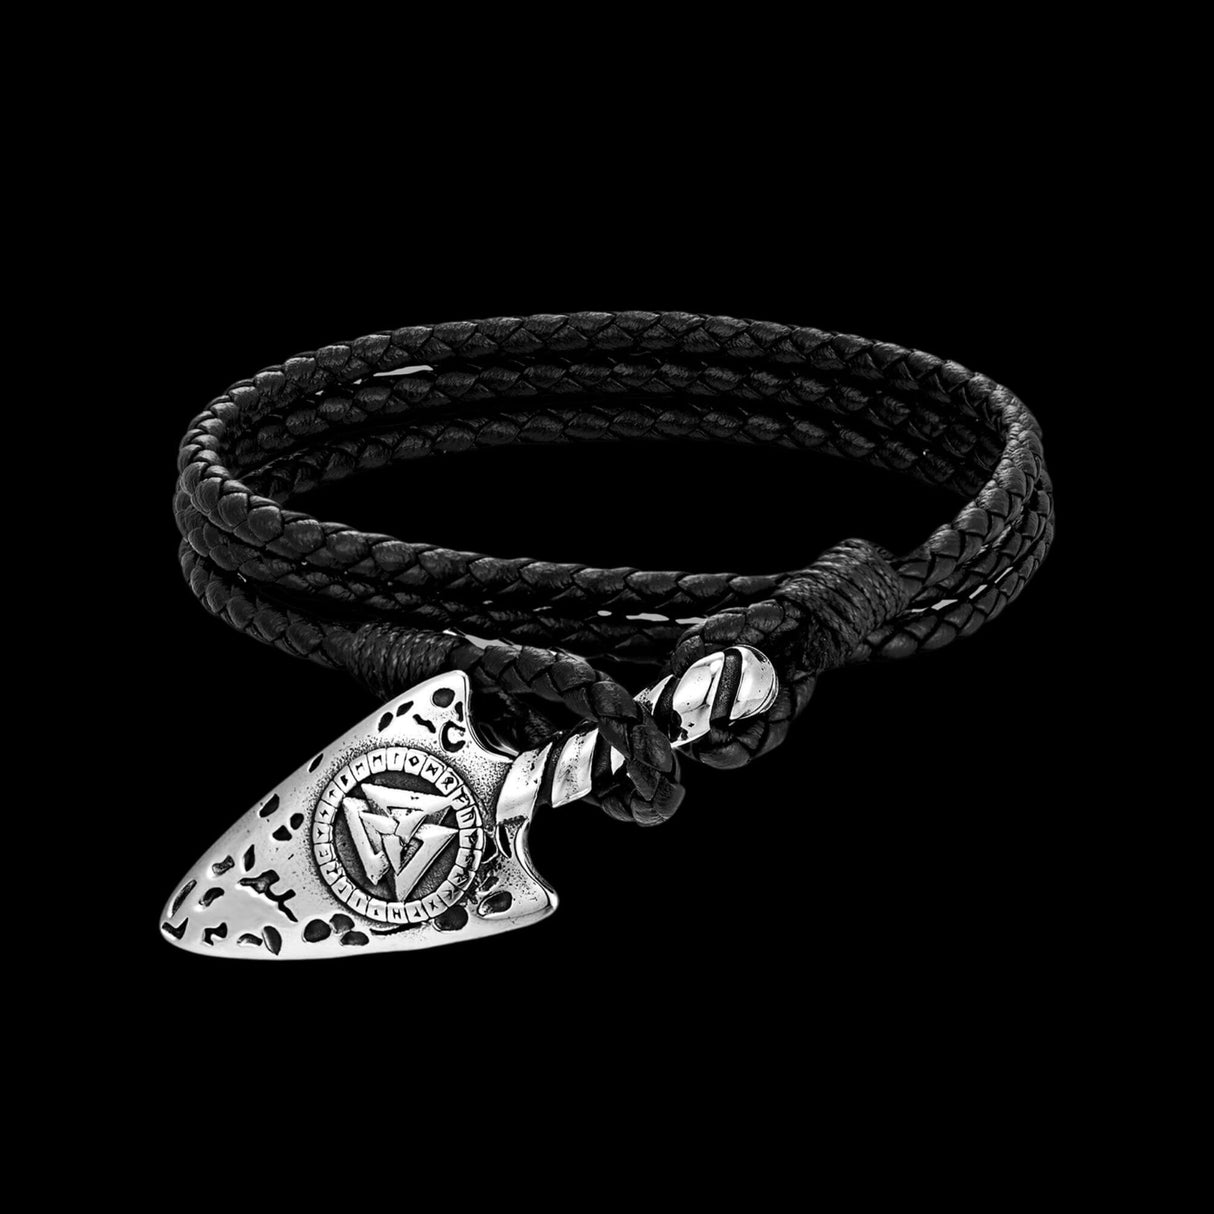 Norse Spear Leather Bracelet